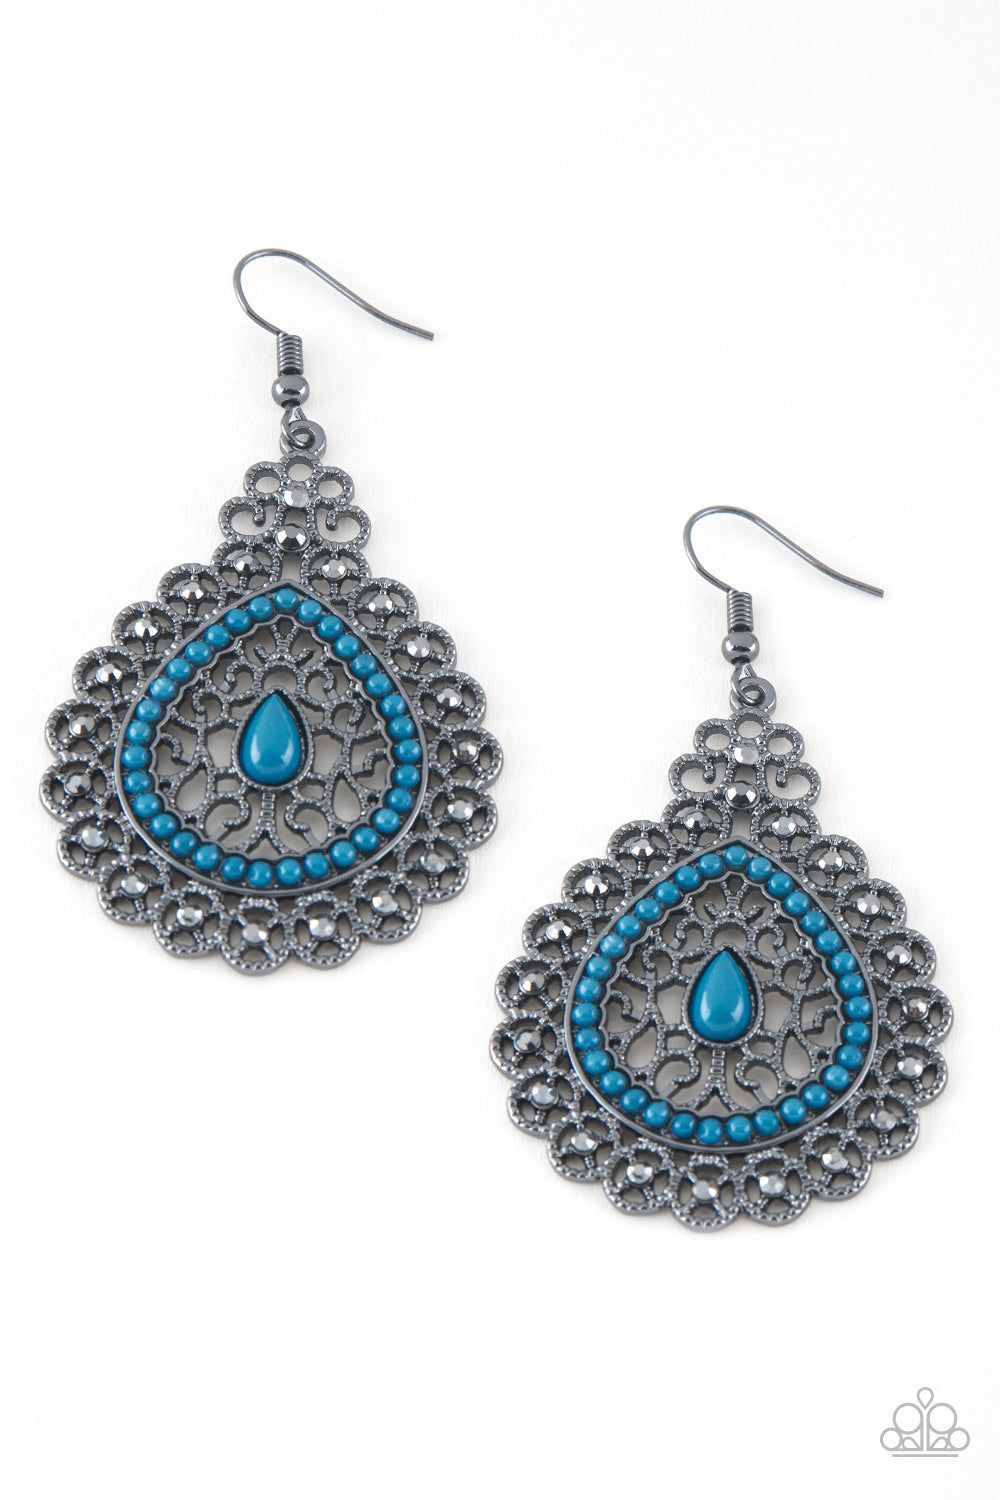 Carnival Courtesan - Blue earrings